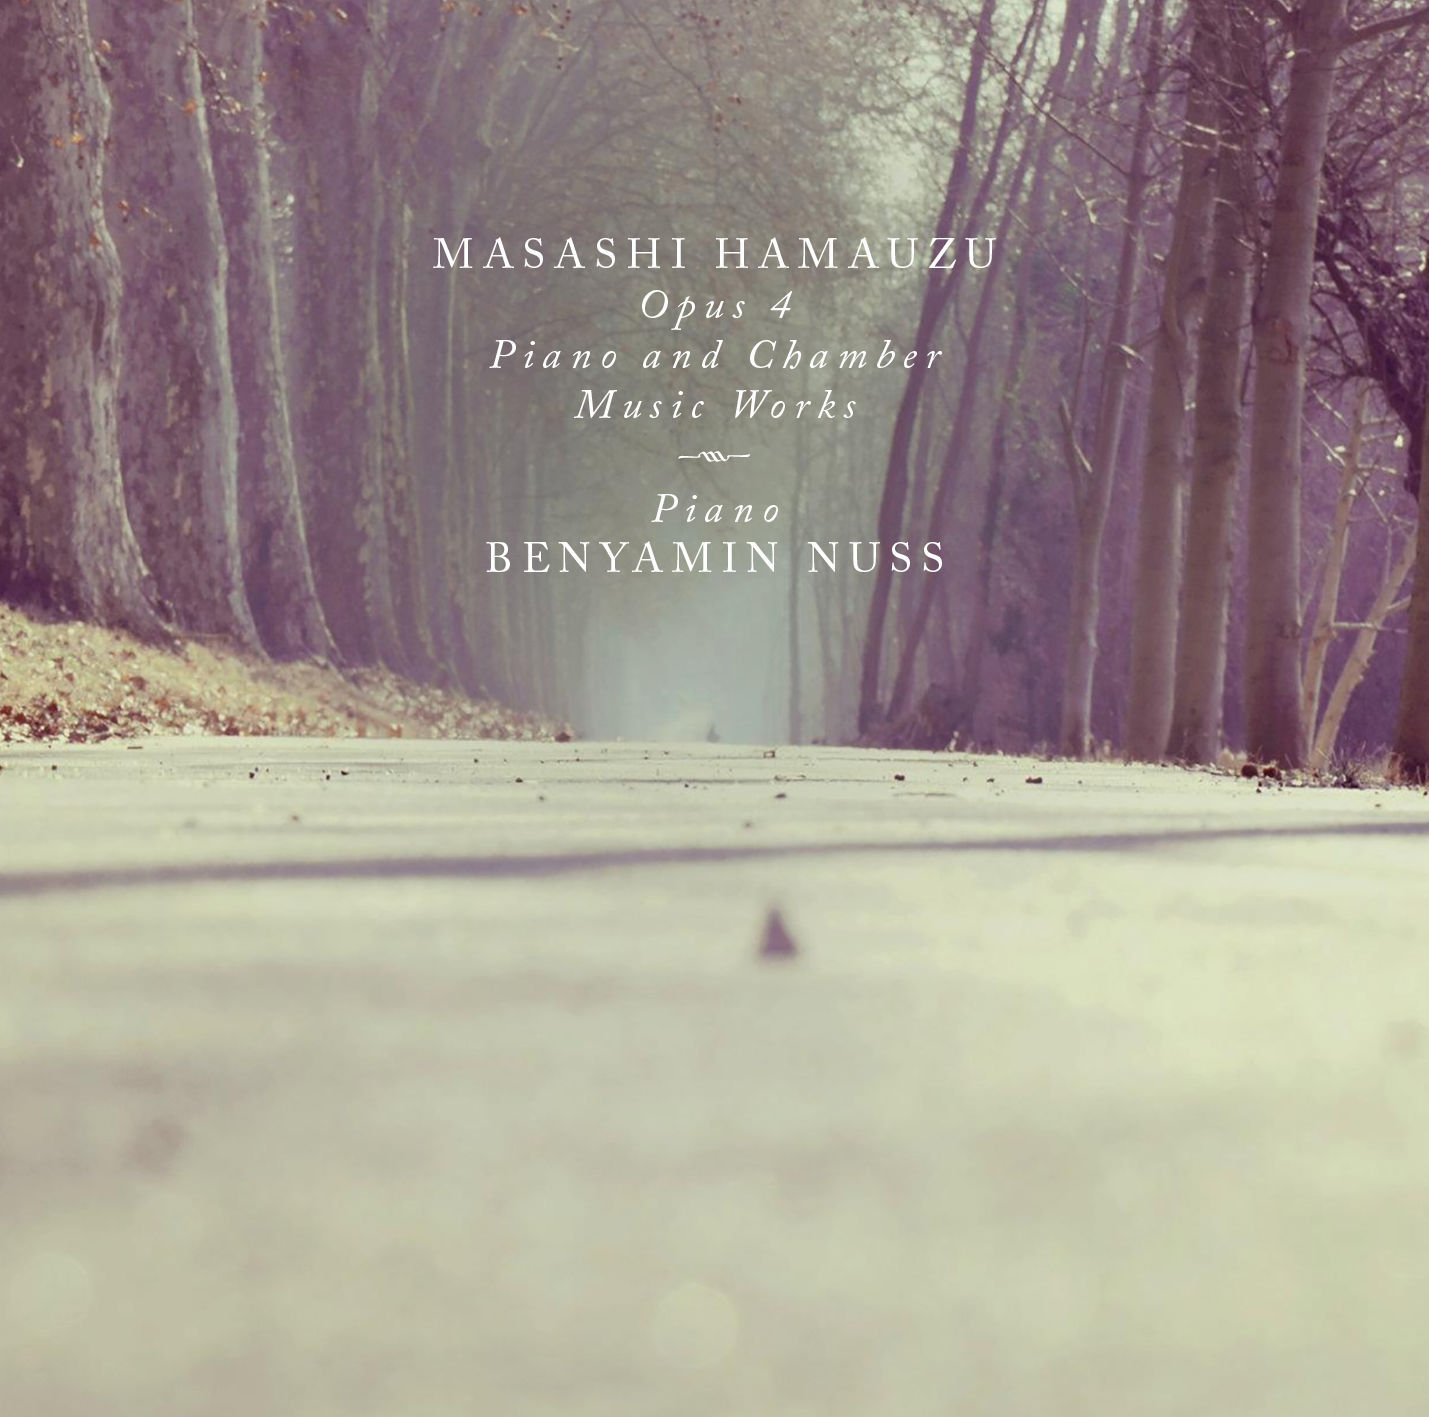 Hamauzu Masashi - Giant (경쾌, 활기, 피아노)